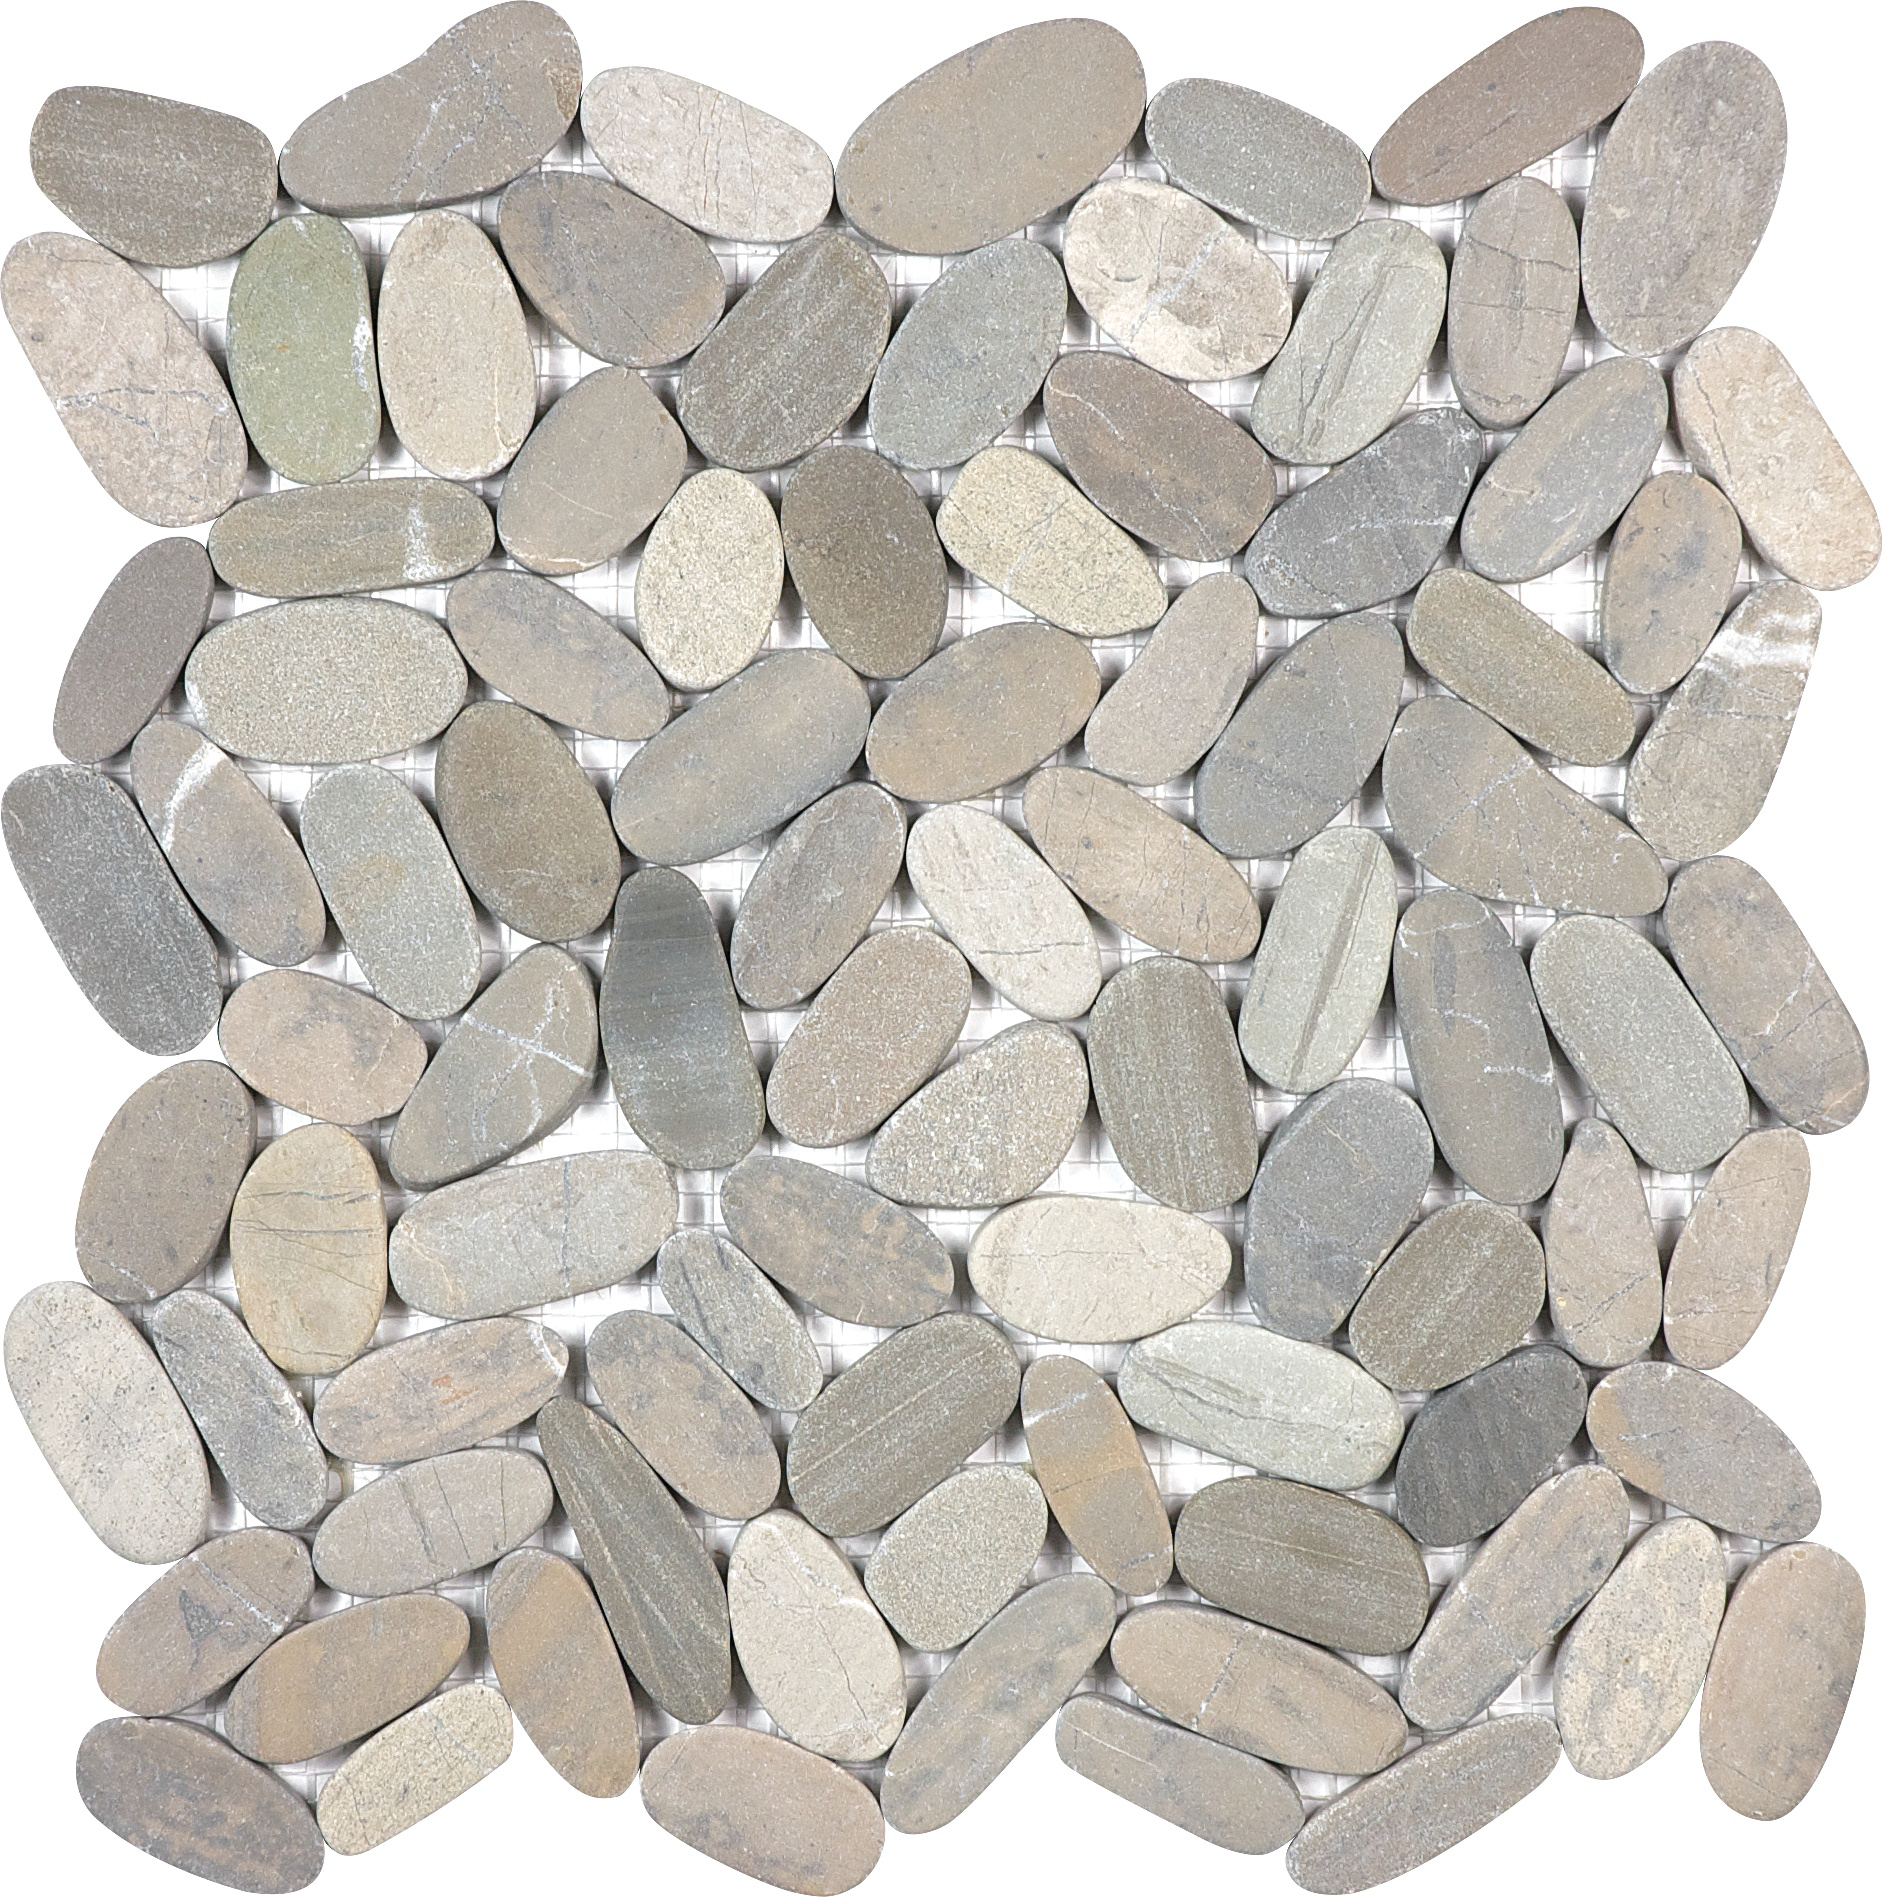 pebble vitality mica flat pebble pattern natural stone mosaic from zen anatolia collection distributed by surface group international matte finish straight edge edge mesh shape